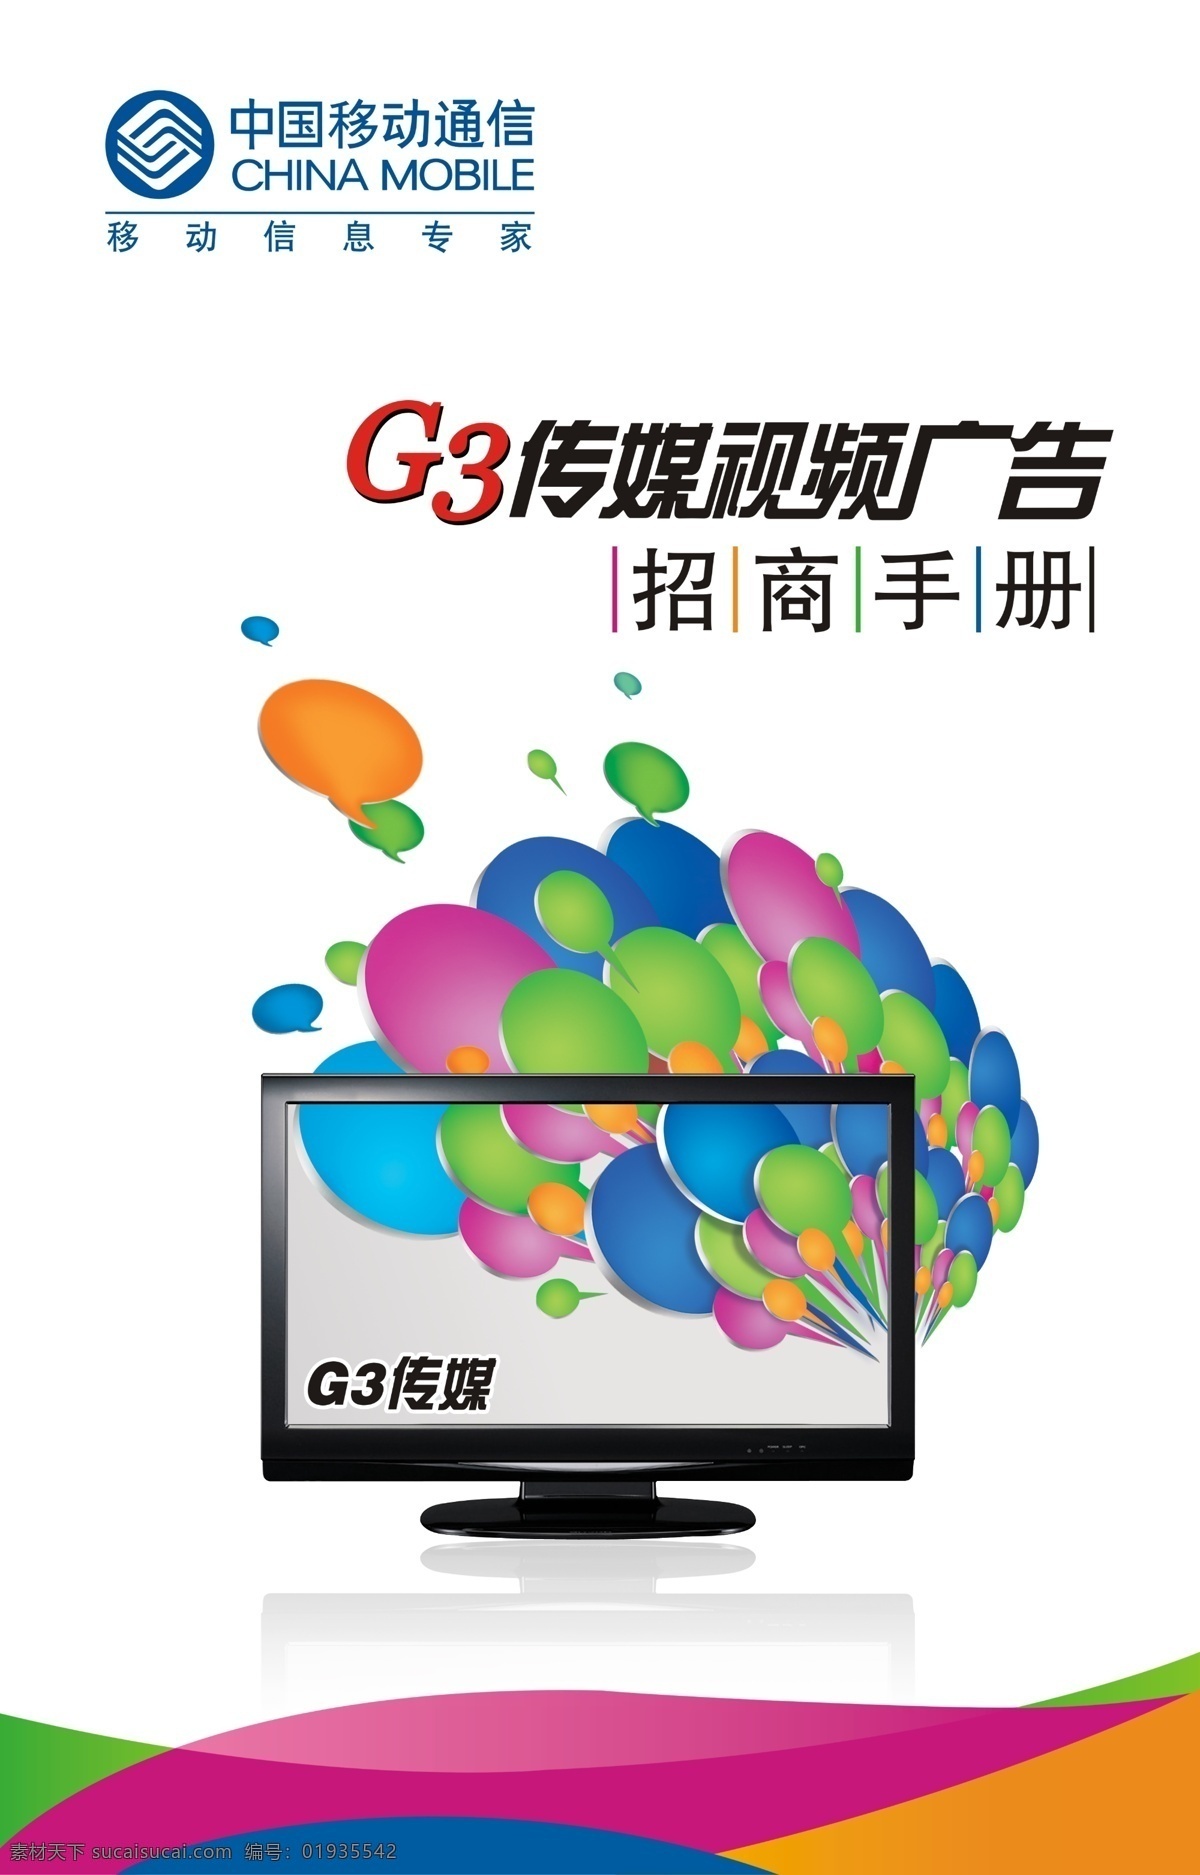 g3招商手册 g3 g3广告 招商手册 招商 移动 g3元素 g3传媒 视频 传媒 广告 液晶 液晶电视 创意 创意广告 广告设计模板 源文件库